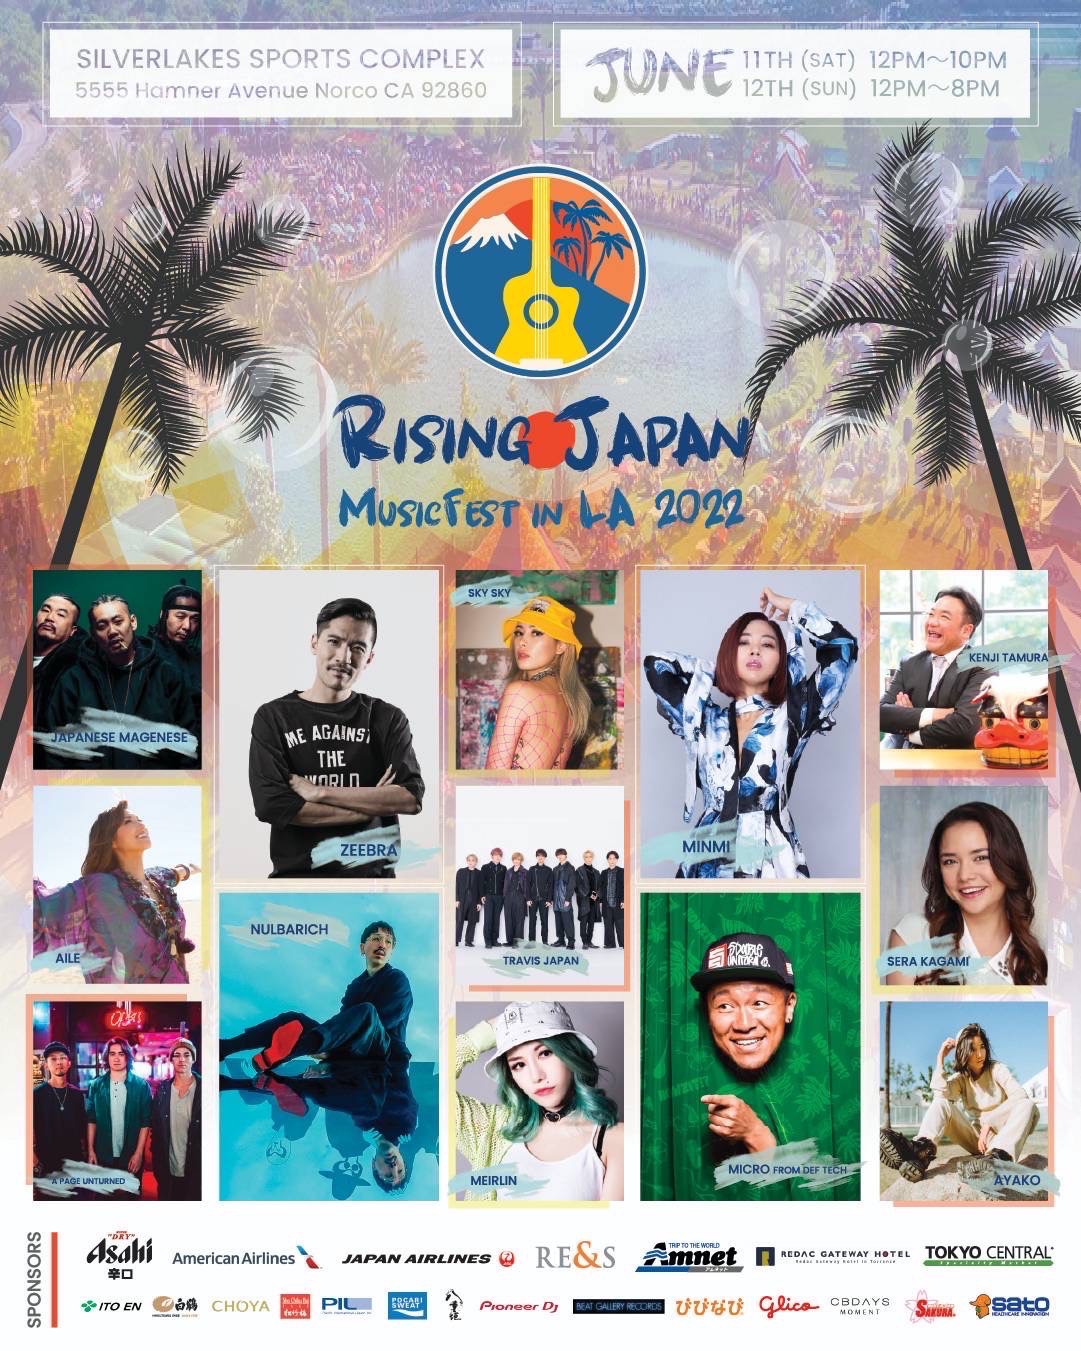 RISING JAPAN MUSICFEST